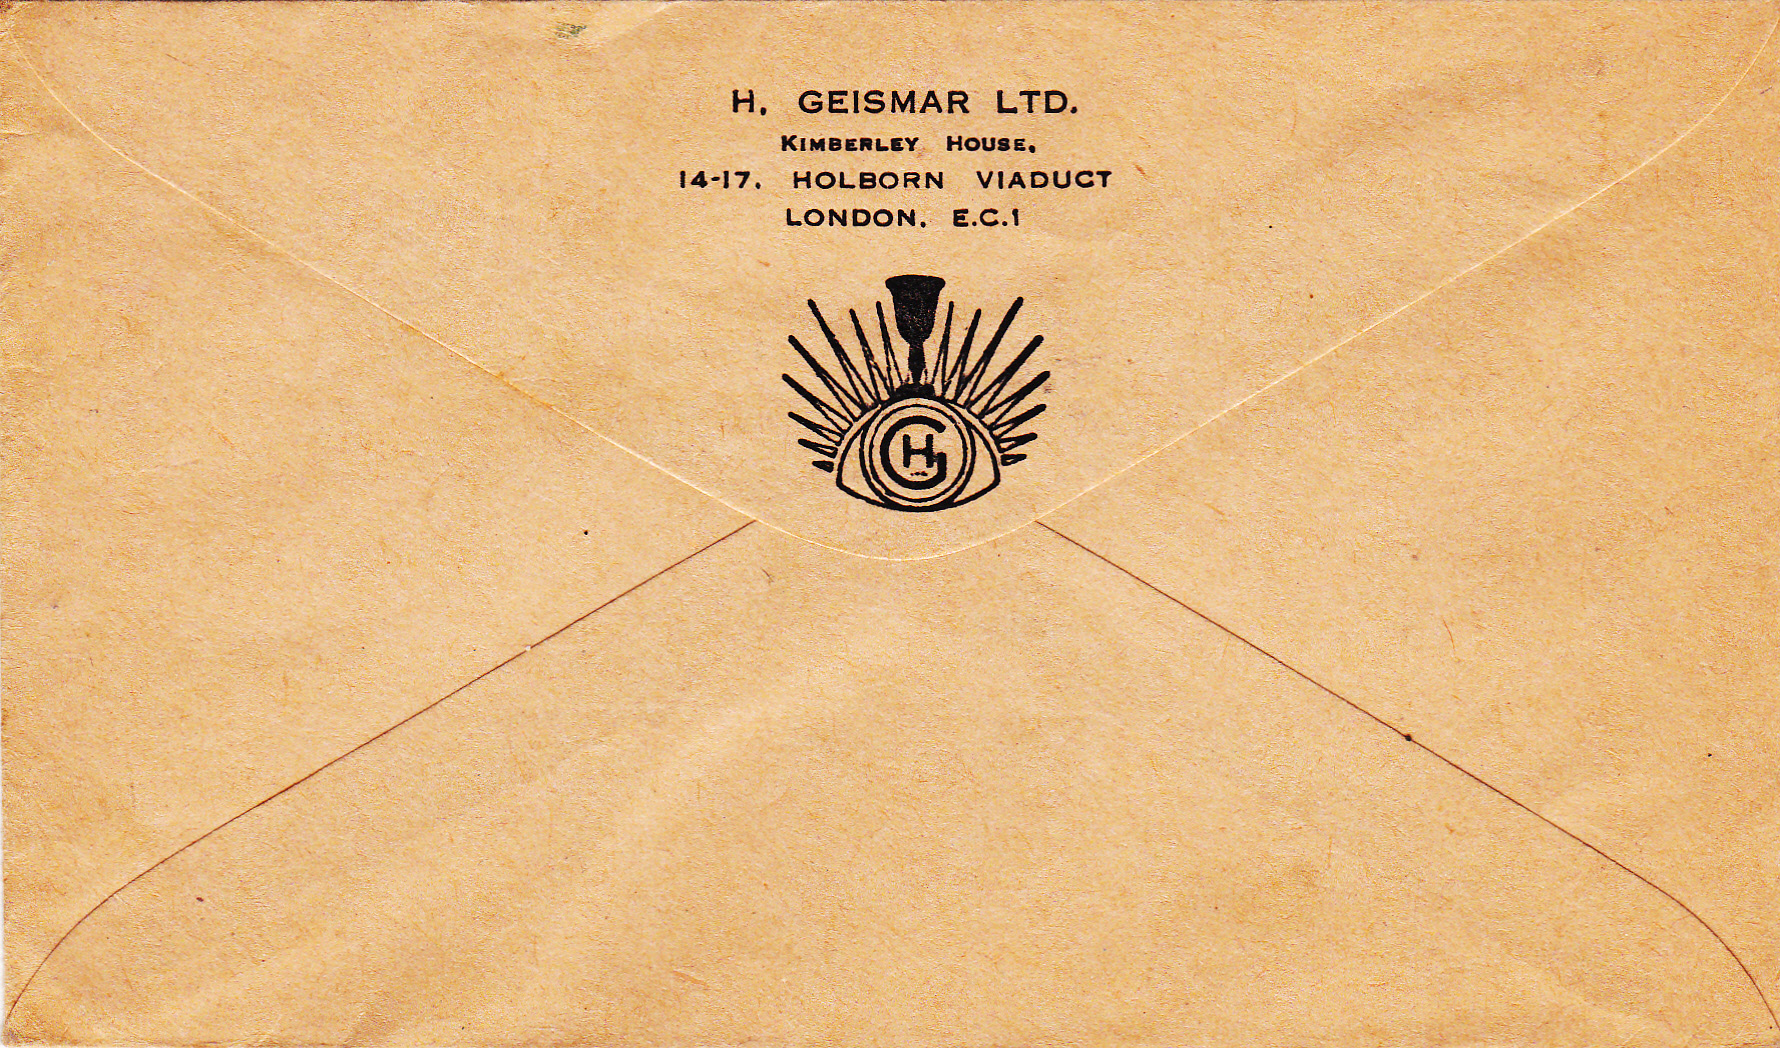 Hans Geismar Ltd envelope with company address and logo